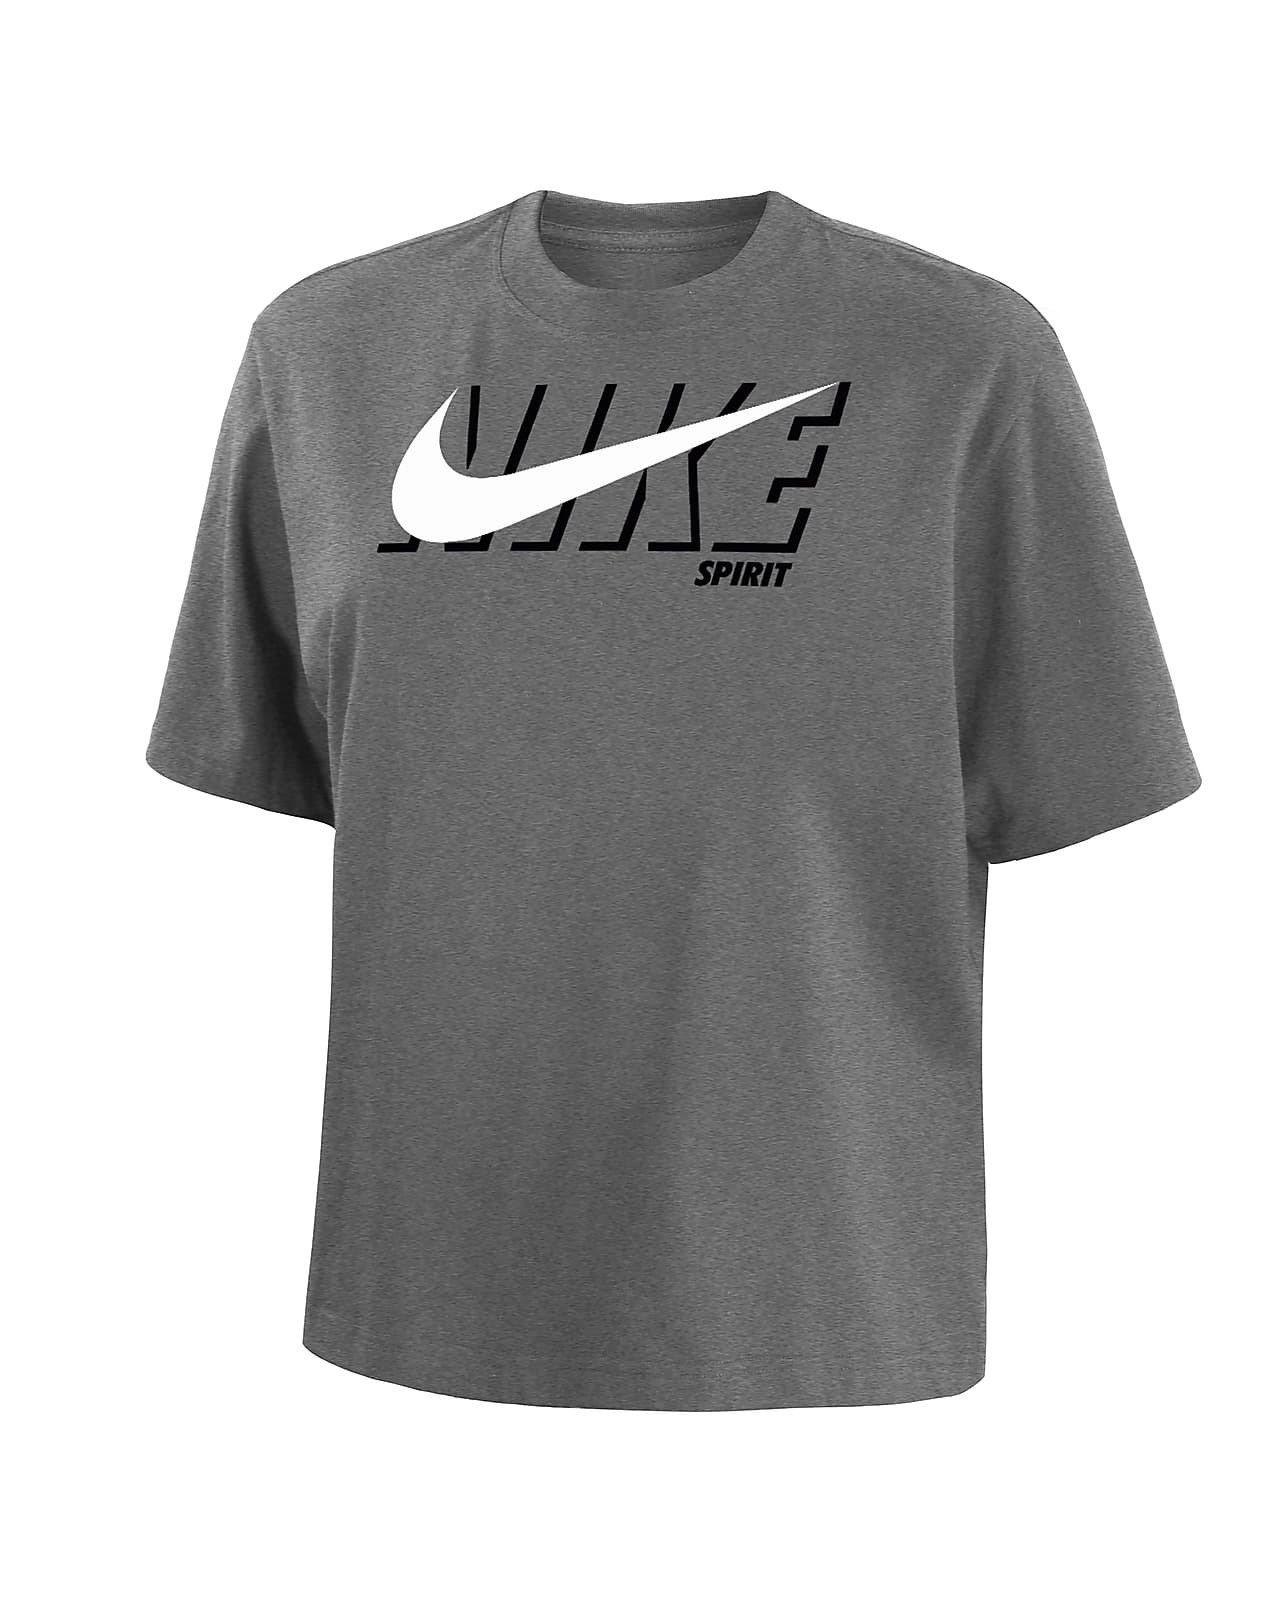 Washington Spirit Women's Nike Soccer T-Shirt